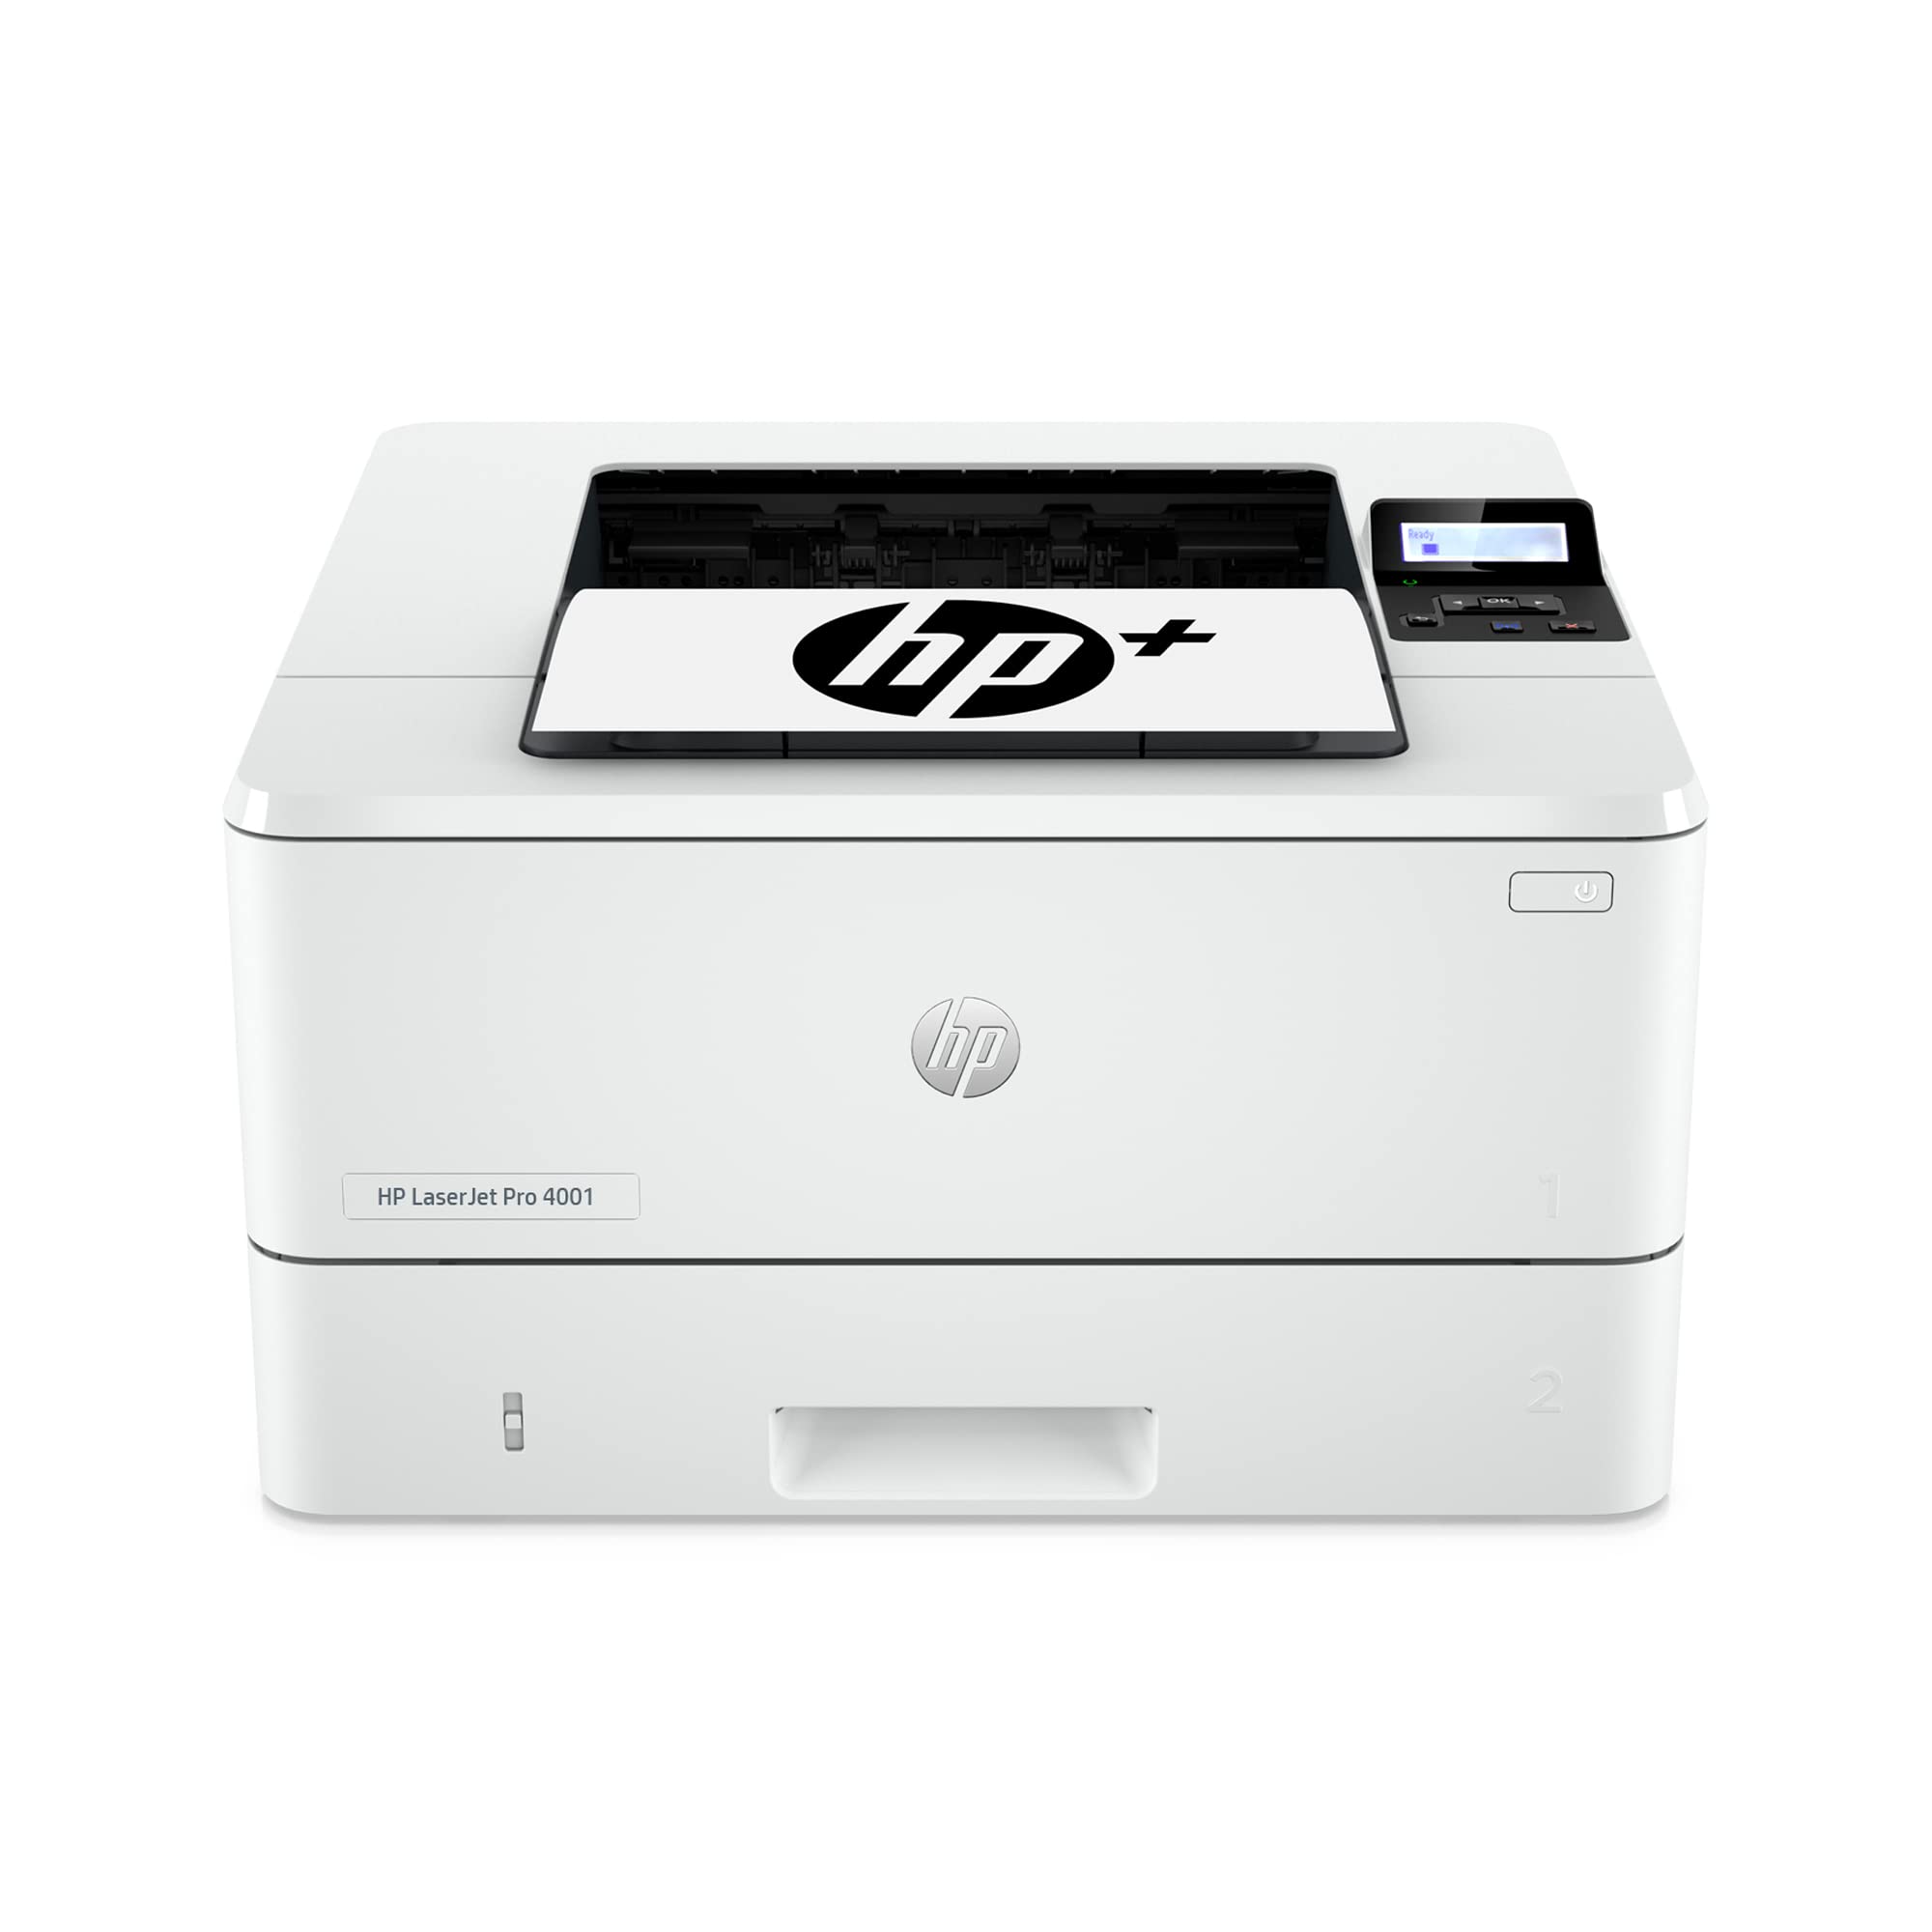 HP LaserJet Pro 4001dwe Wireless Black & White Printer with + Smart Office Features